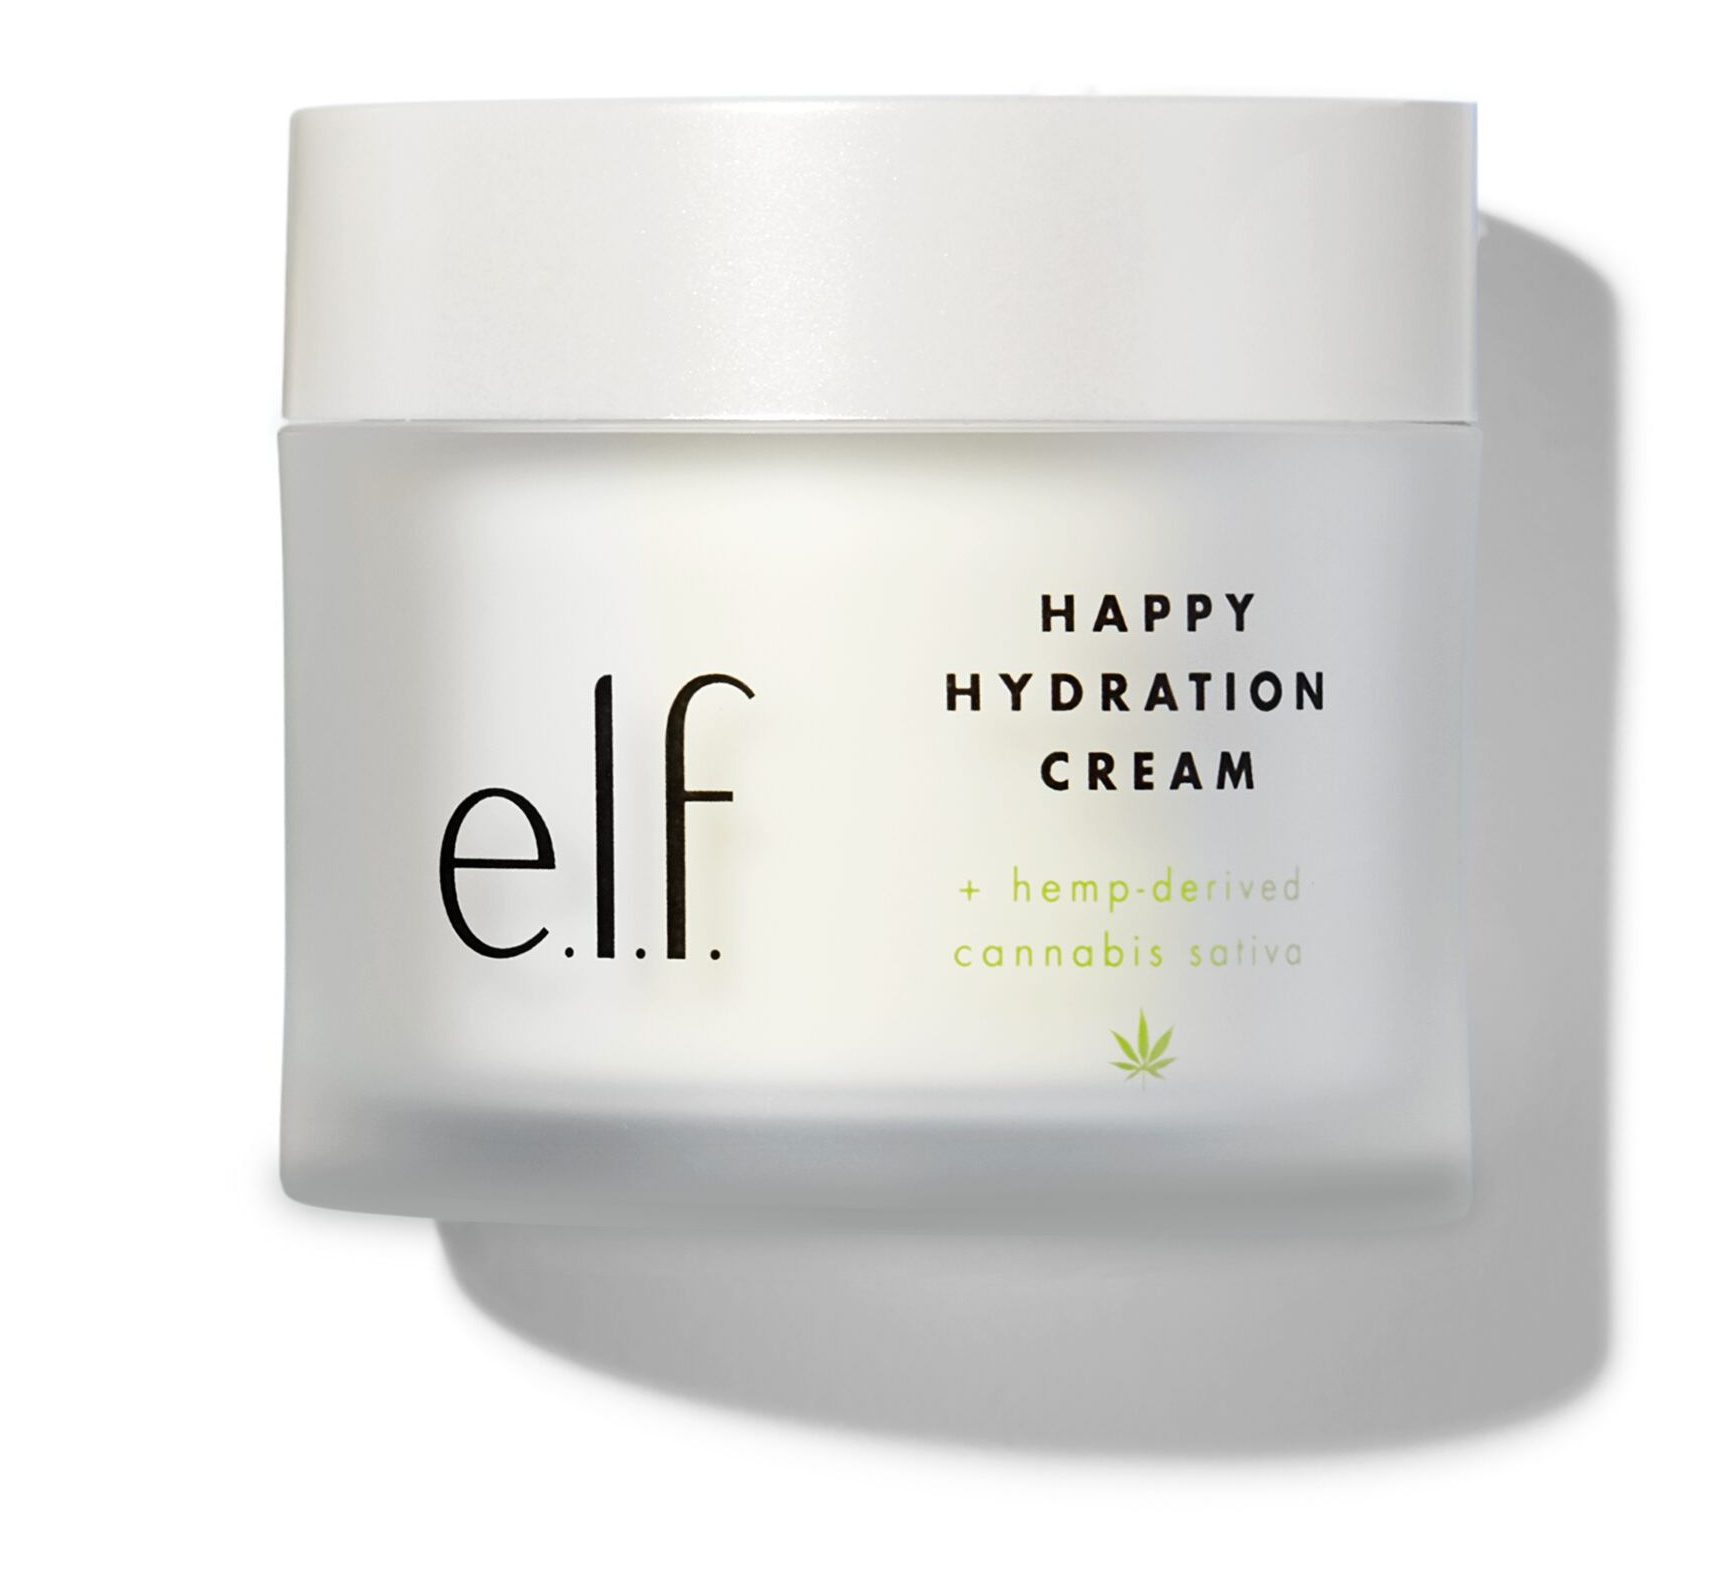 elf Happy Hydration Cream